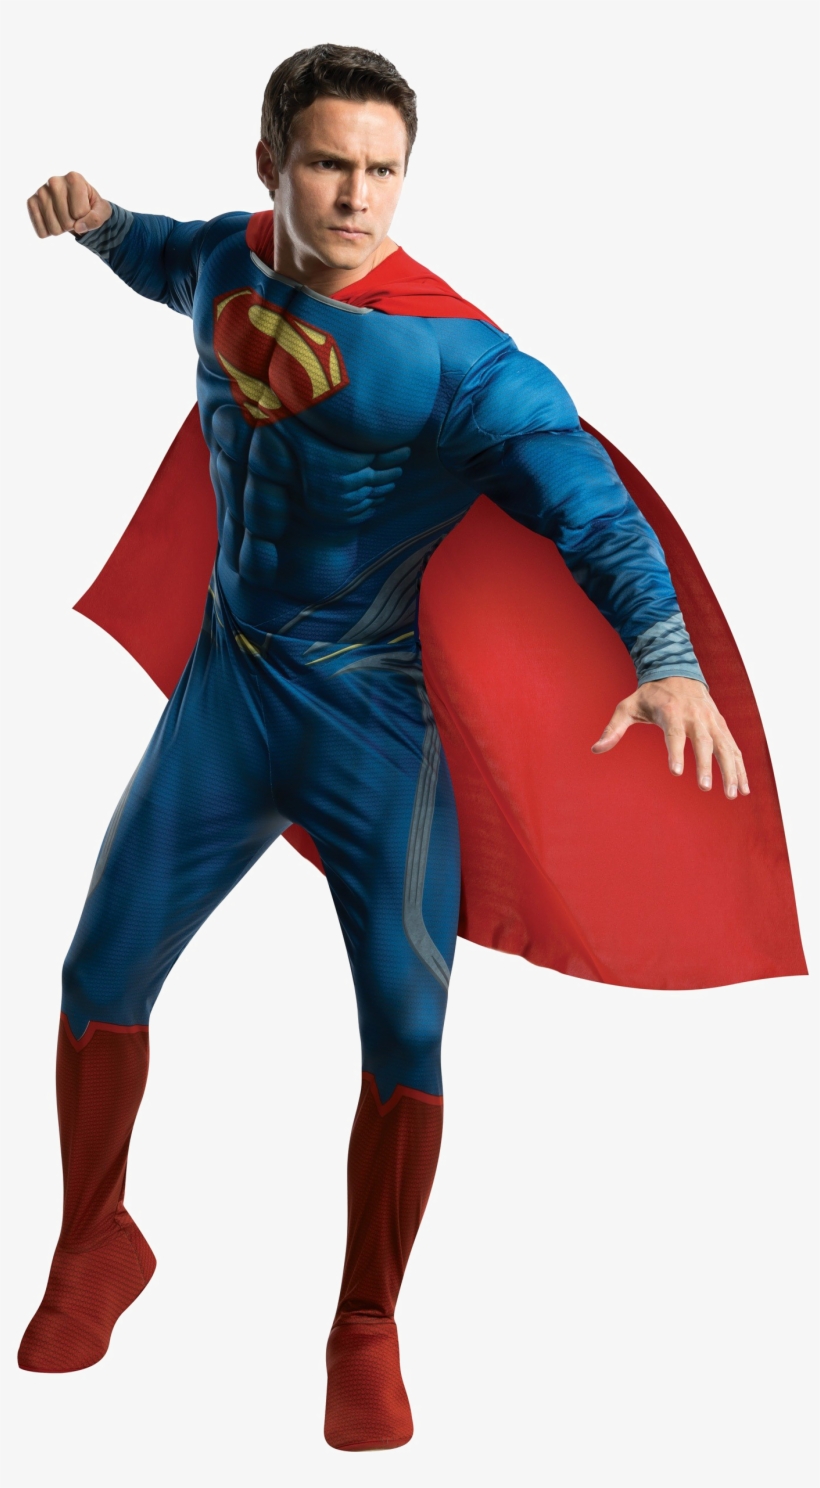 Superman Png Background Image - Halloween Costumes Superman, transparent png #21205